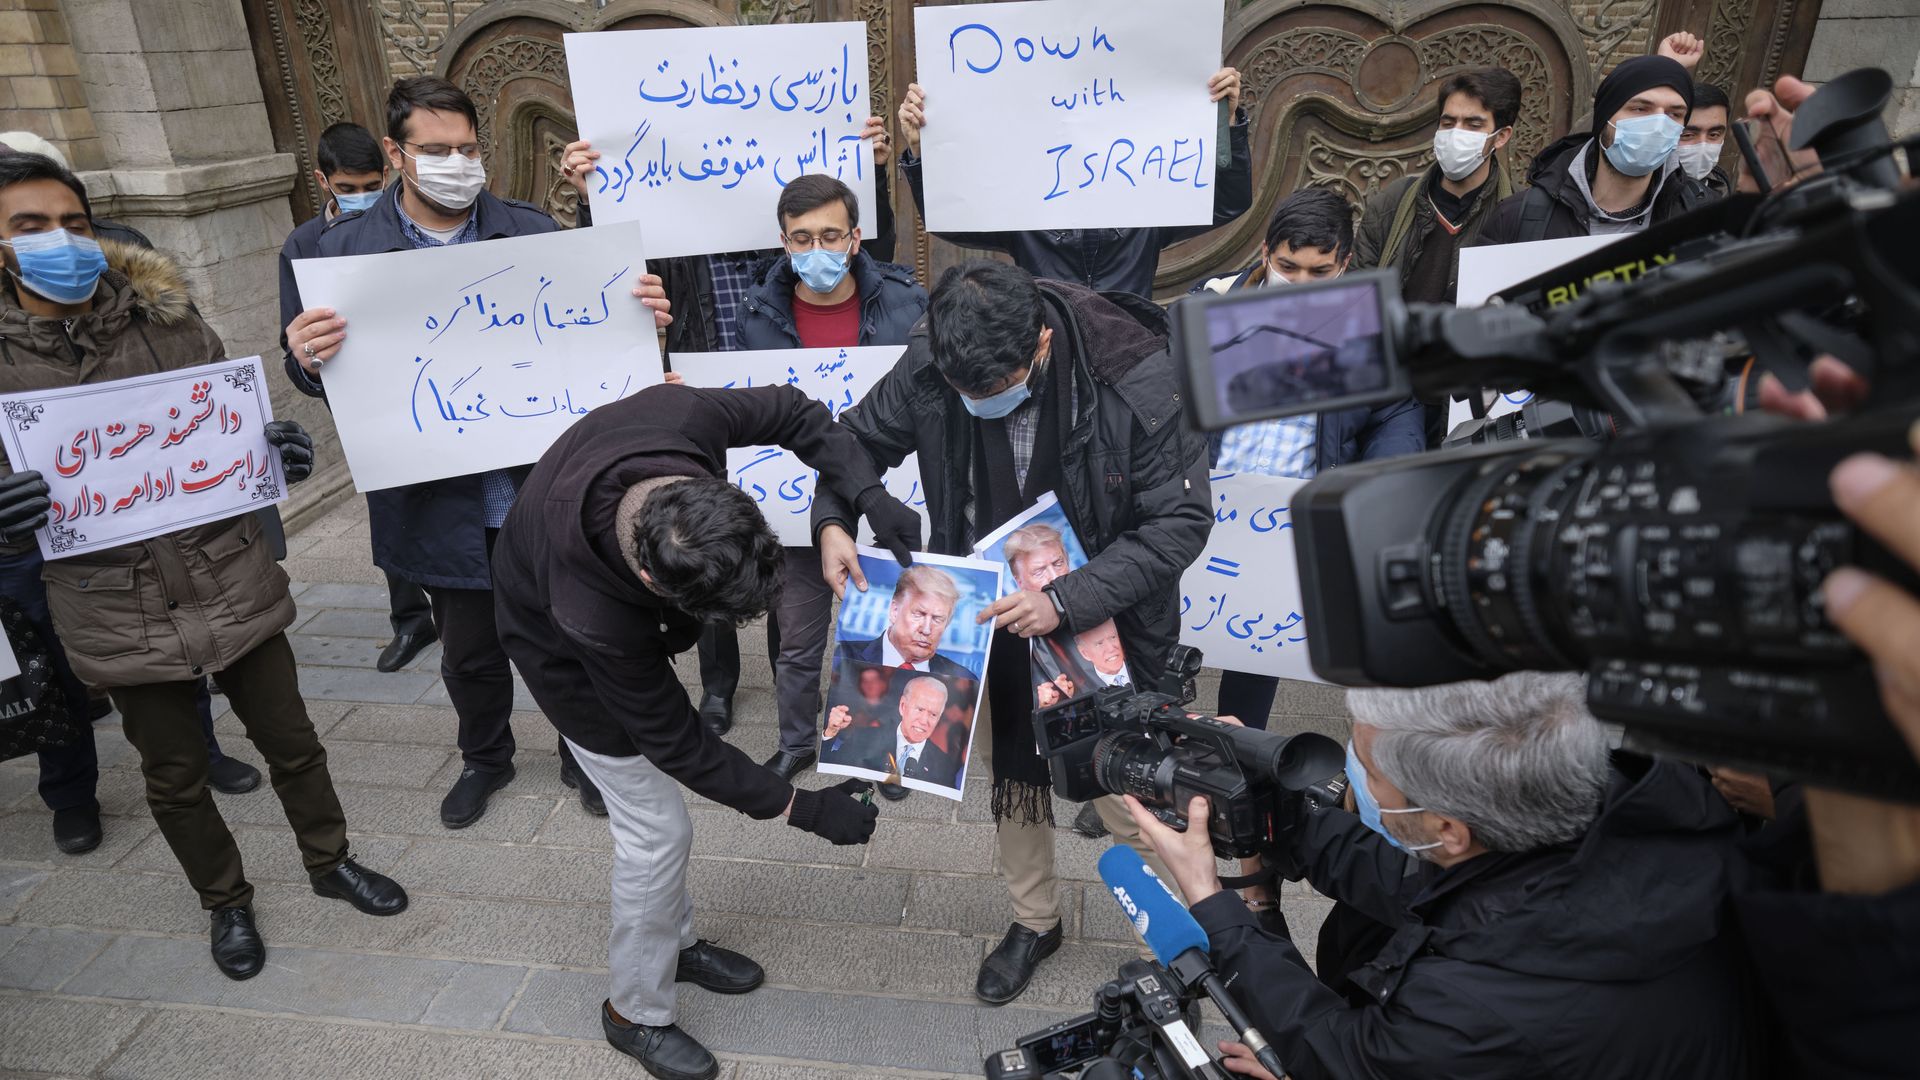 Photo of protesters in Iran burning portraits of Donald Trump and Joe Biden